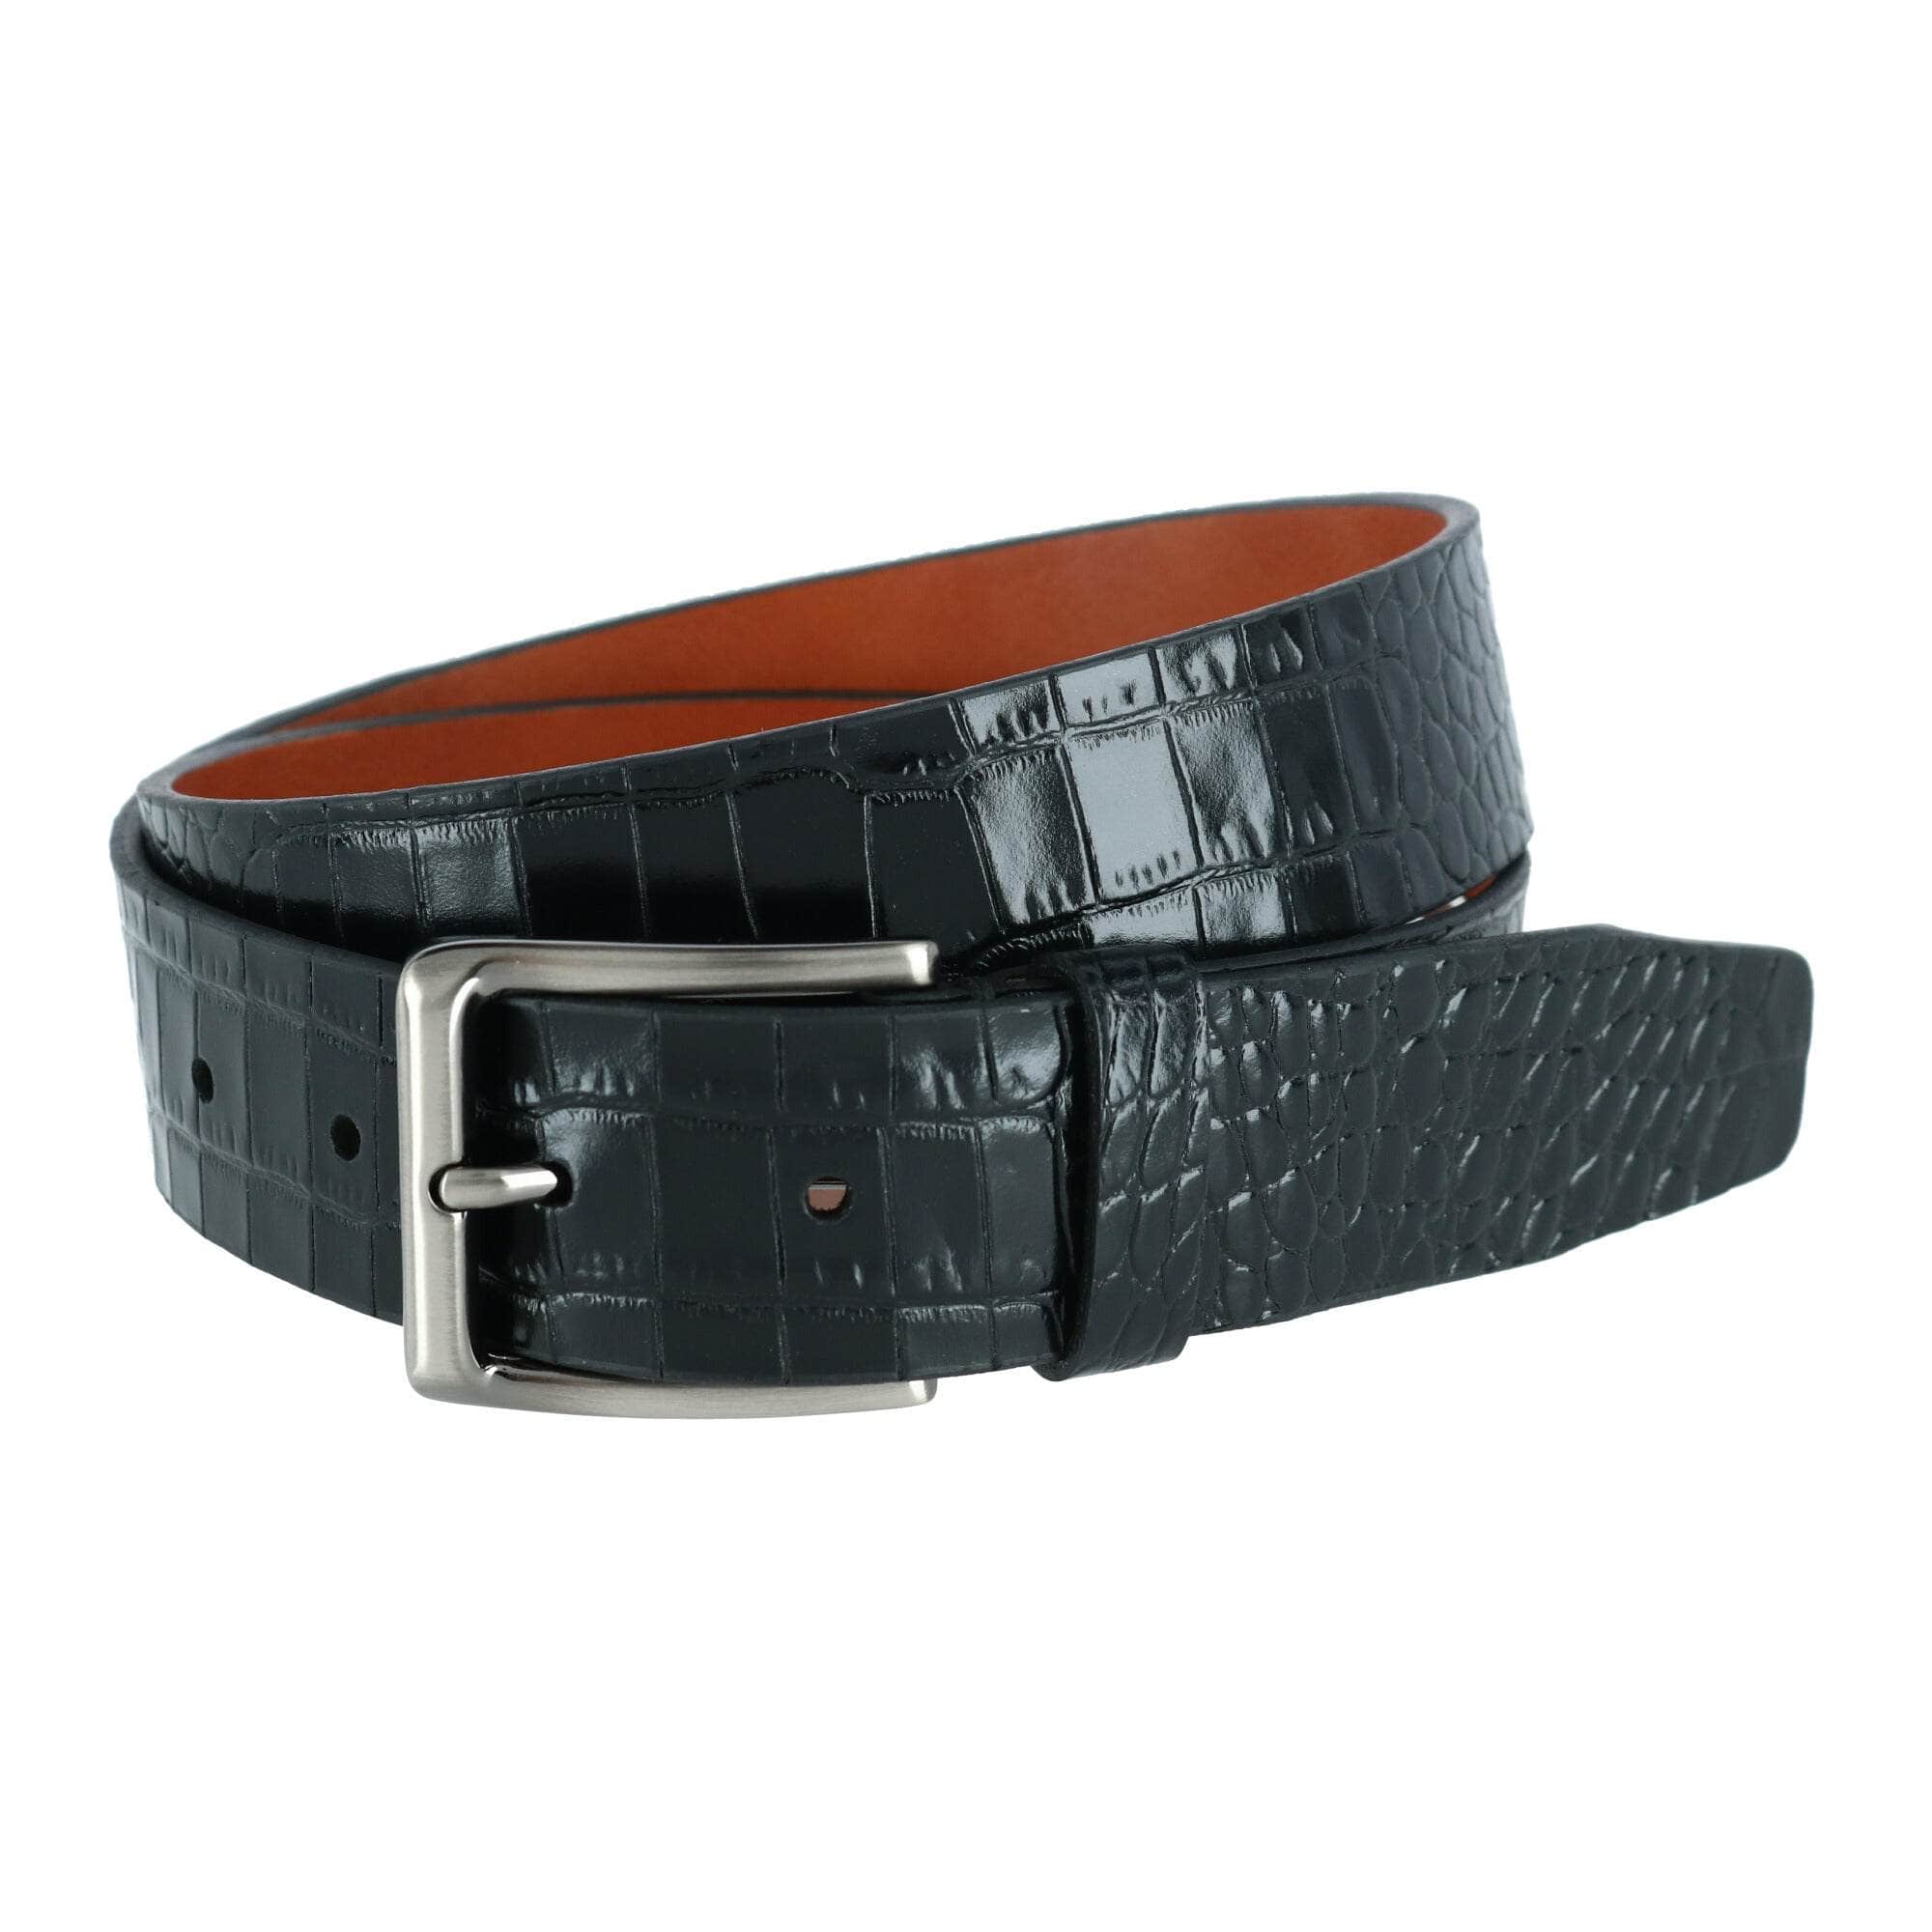 Mock-croc leather belt